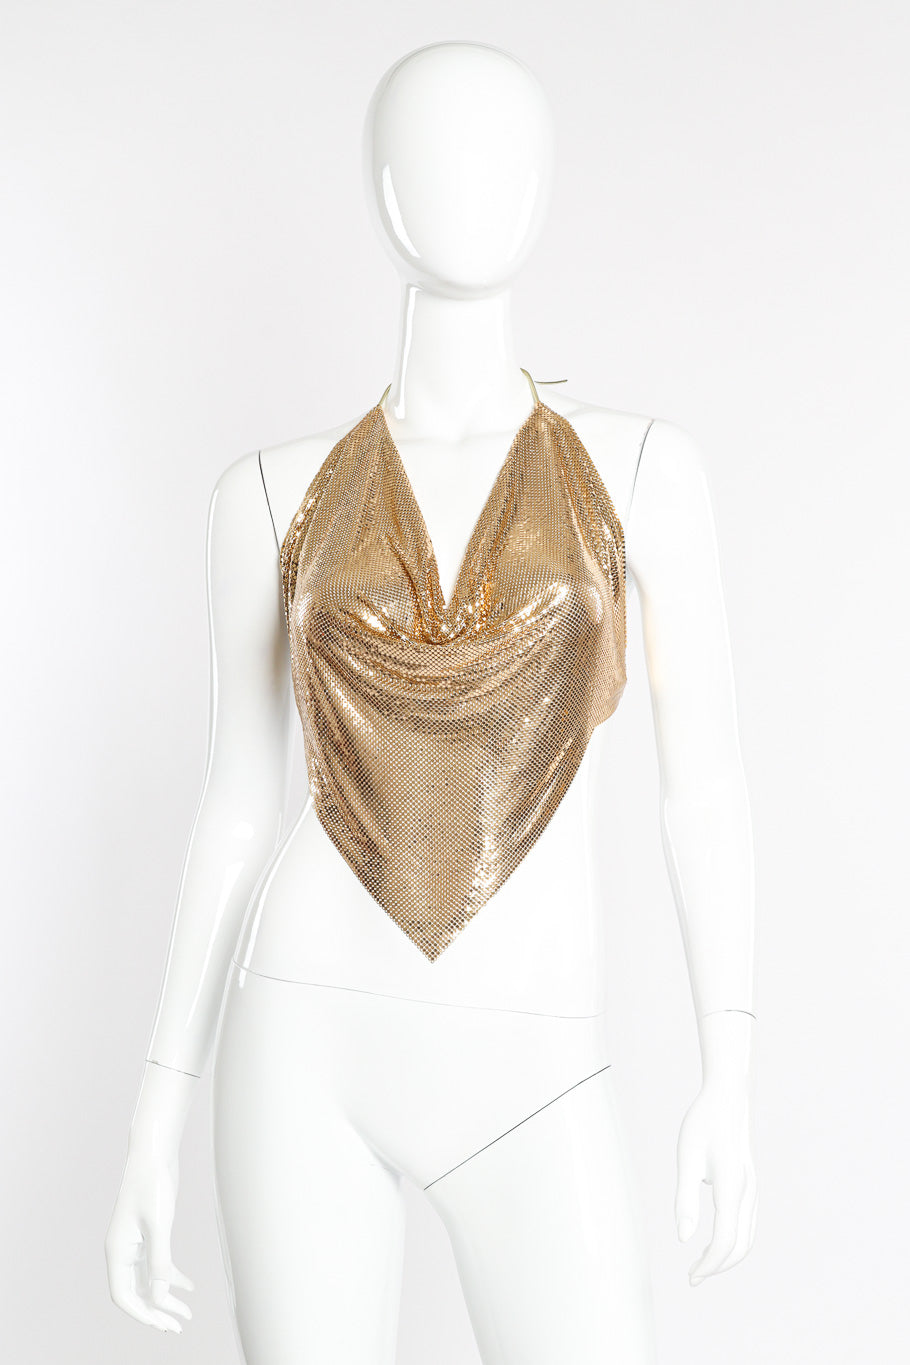 Vintage Whiting & Davis Gold Mesh Halter Top front view on mannequin @Recessla